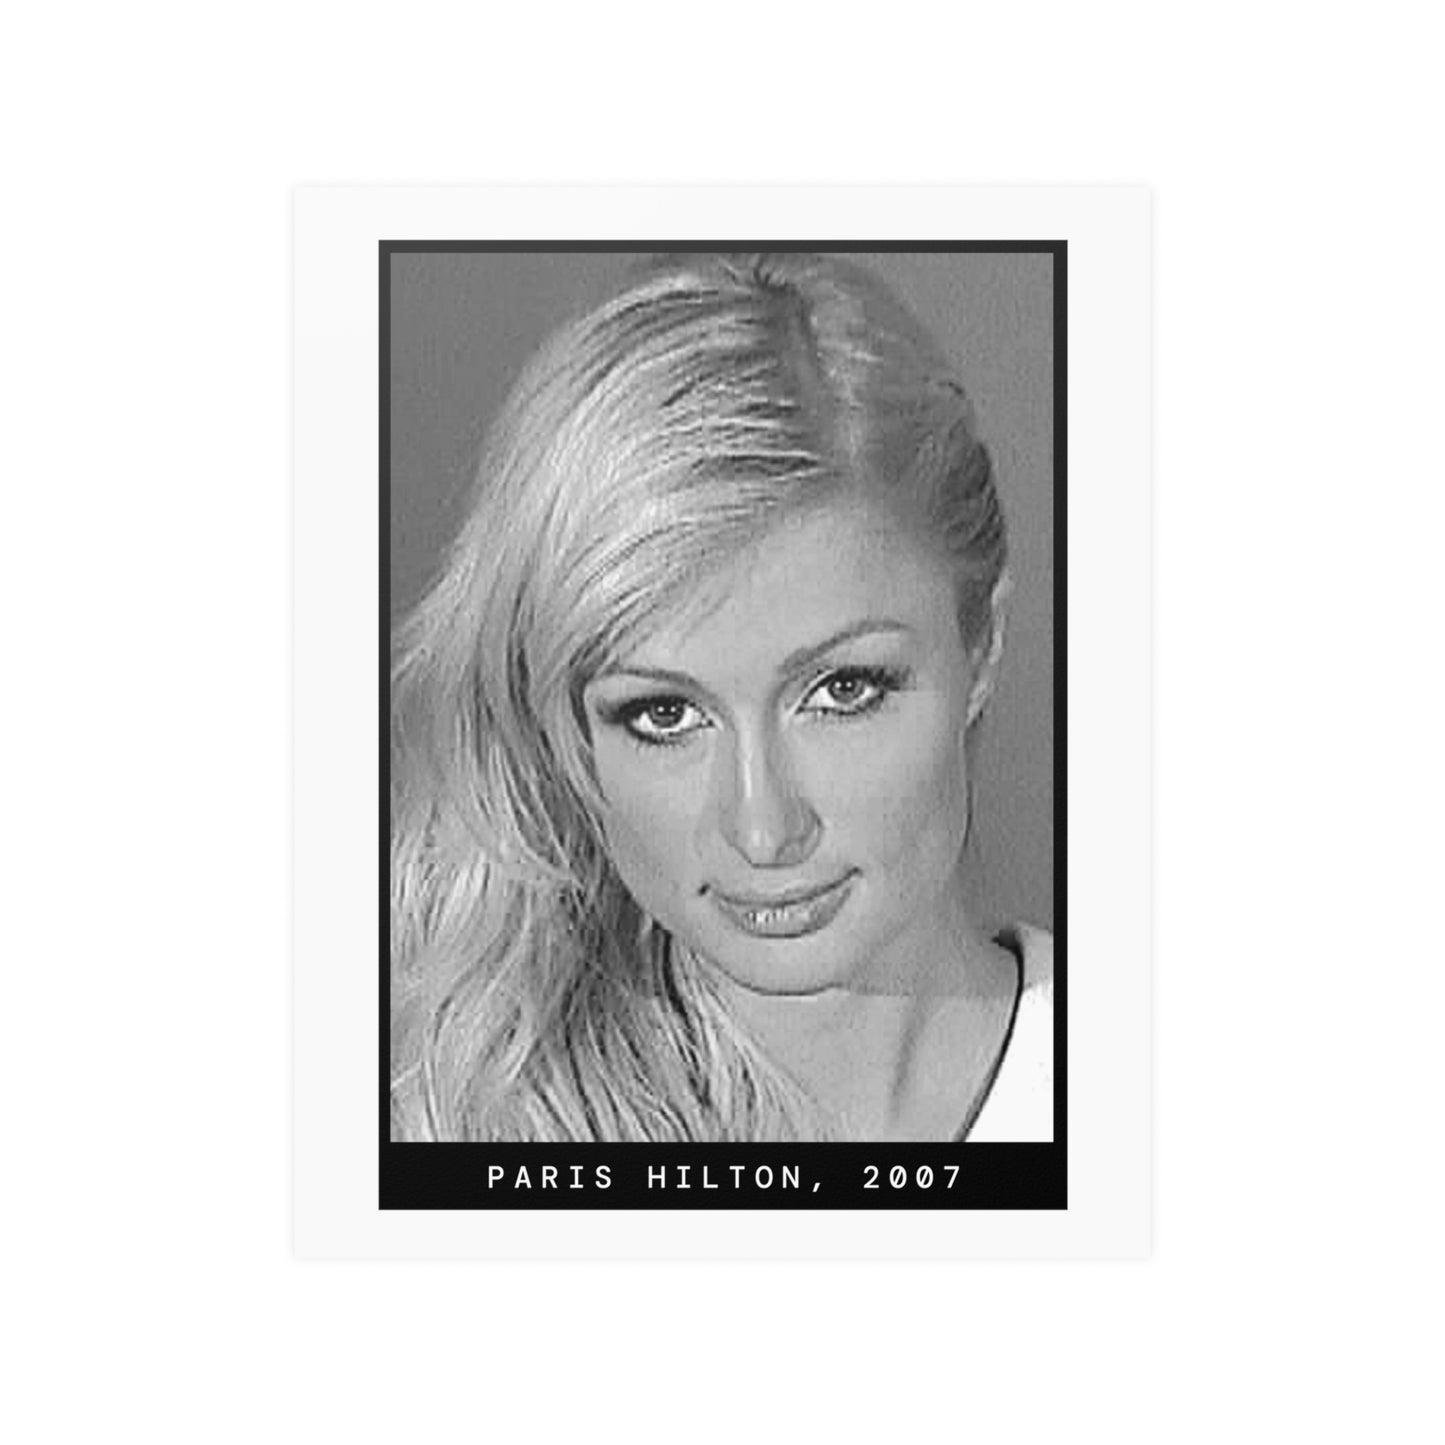 Paris Hilton, 2007 Celebrity Mugshot Poster